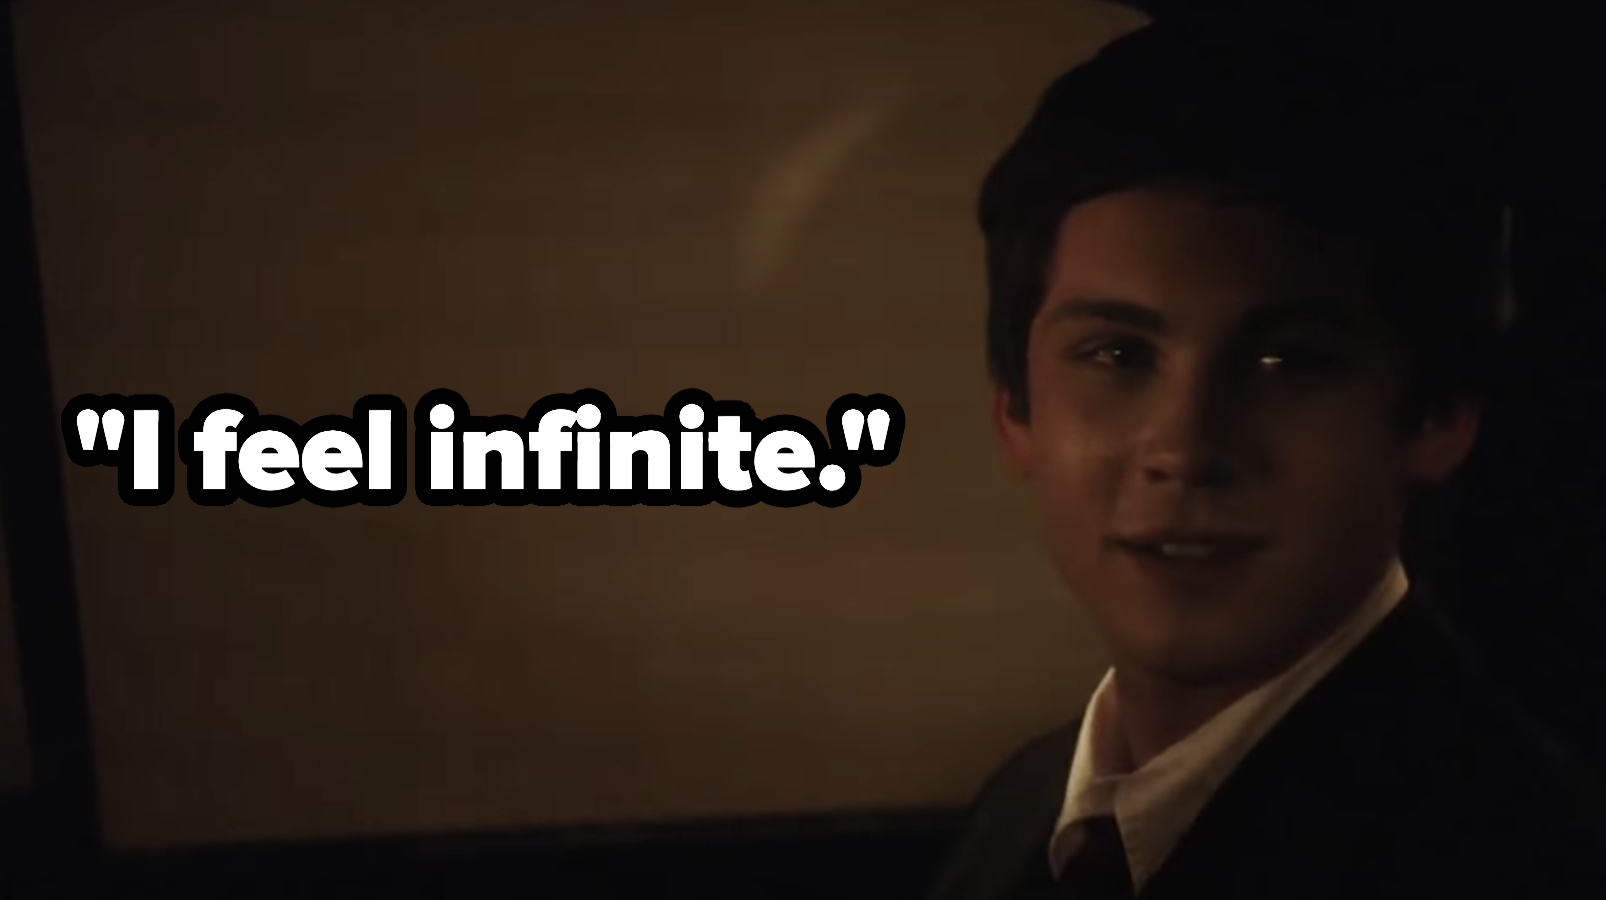 Charlie says &quot;I feel infinite&quot;